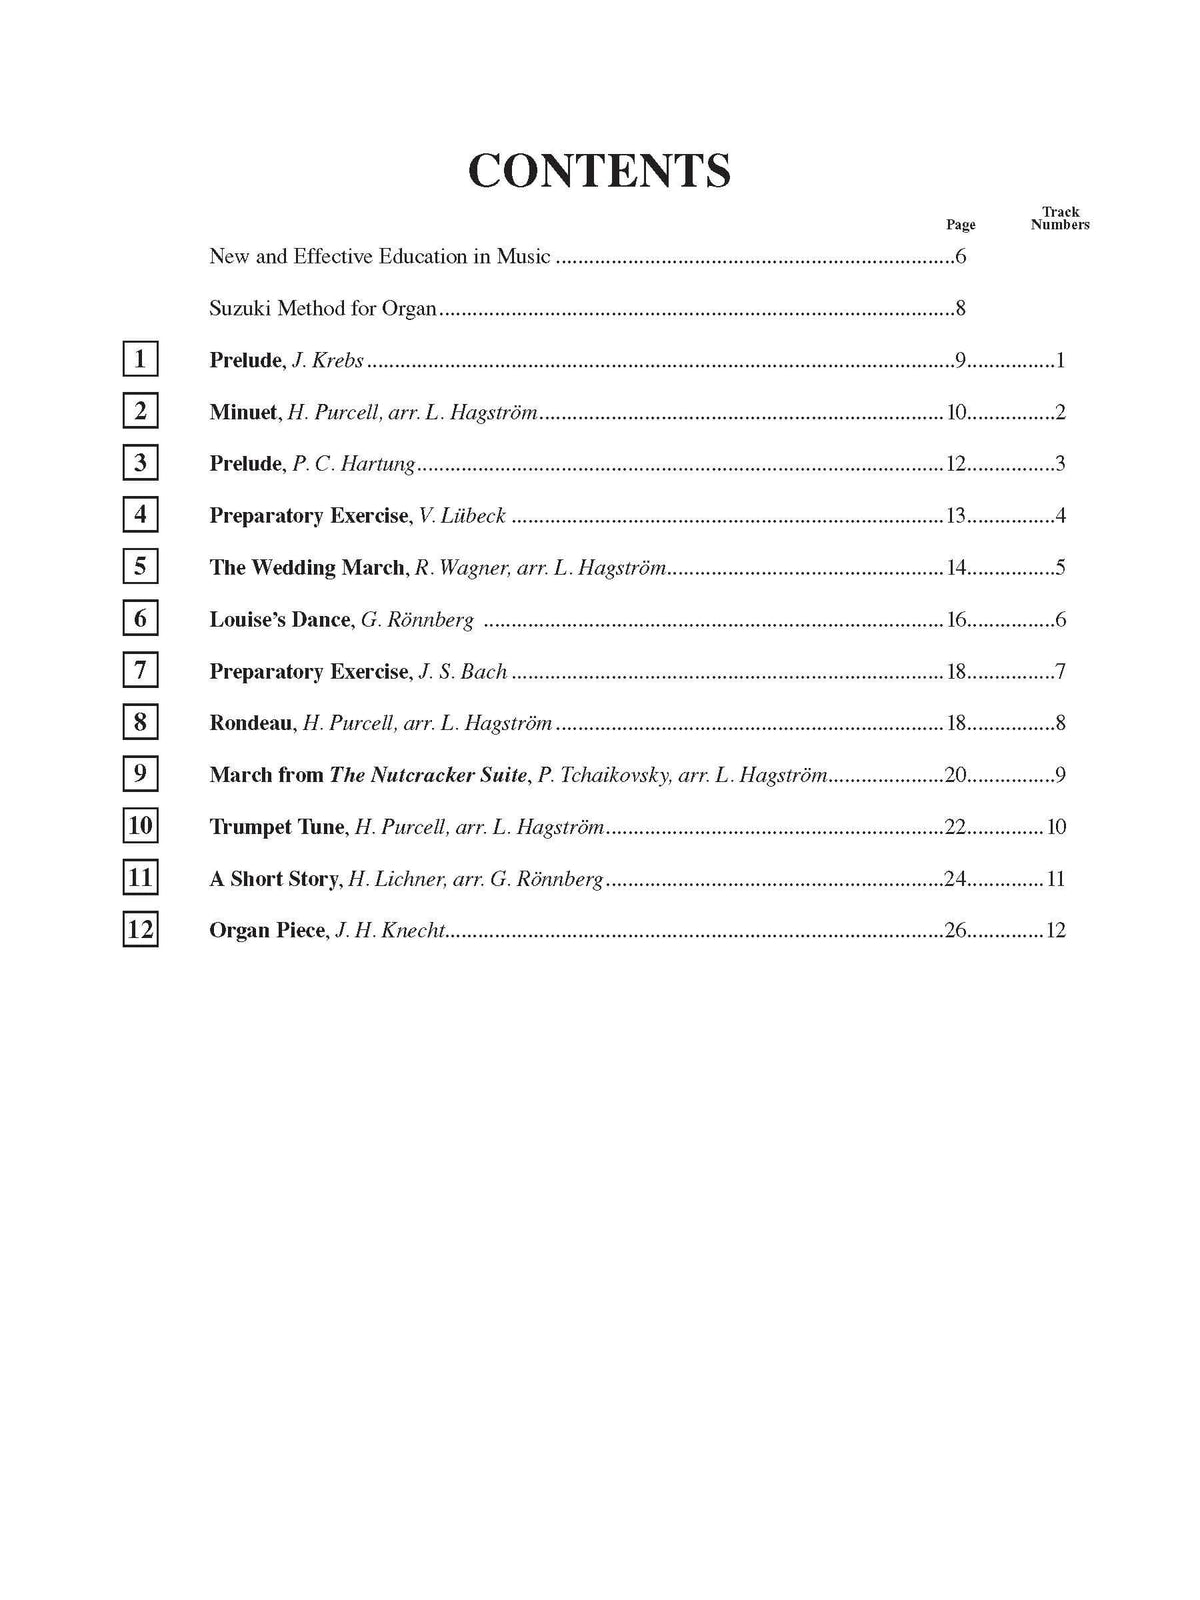 Suzuki Organ School Method Book and CD, Volume 4